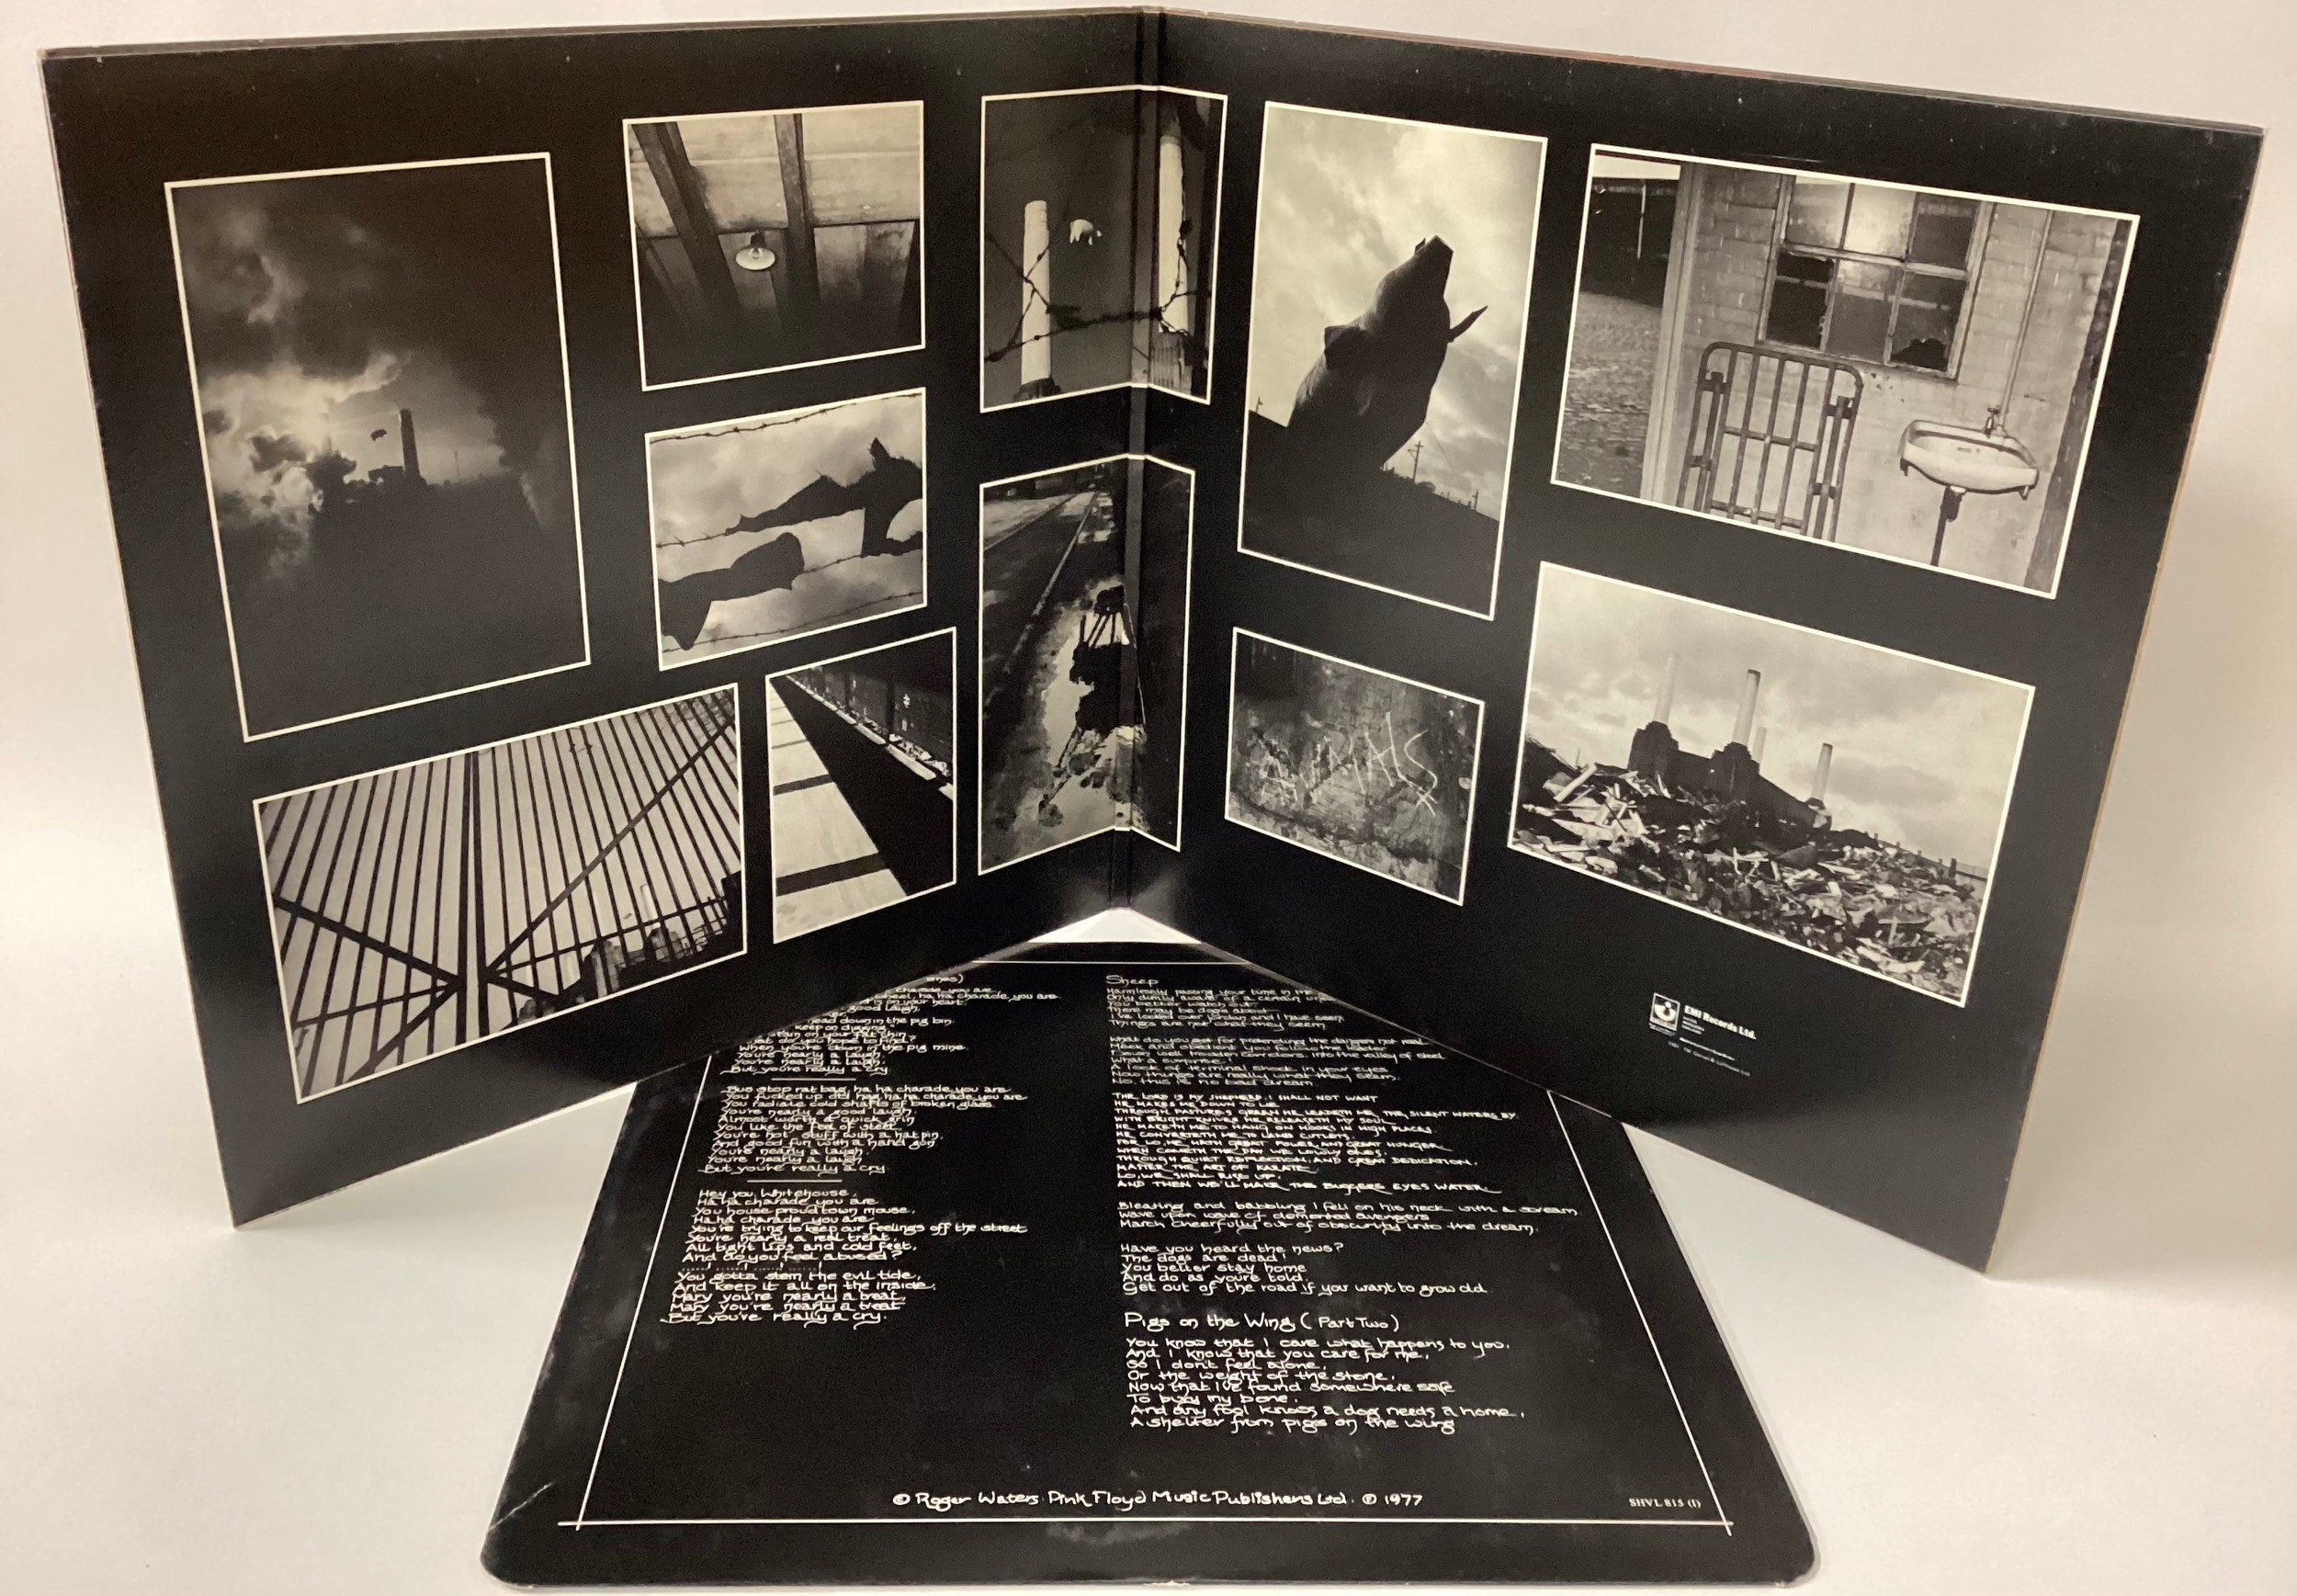 PINK FLOYD VINYL ALBUM ‘ANIMALS’. Great copy of this Gatefold Floyd album found here on Harvest - Image 3 of 4